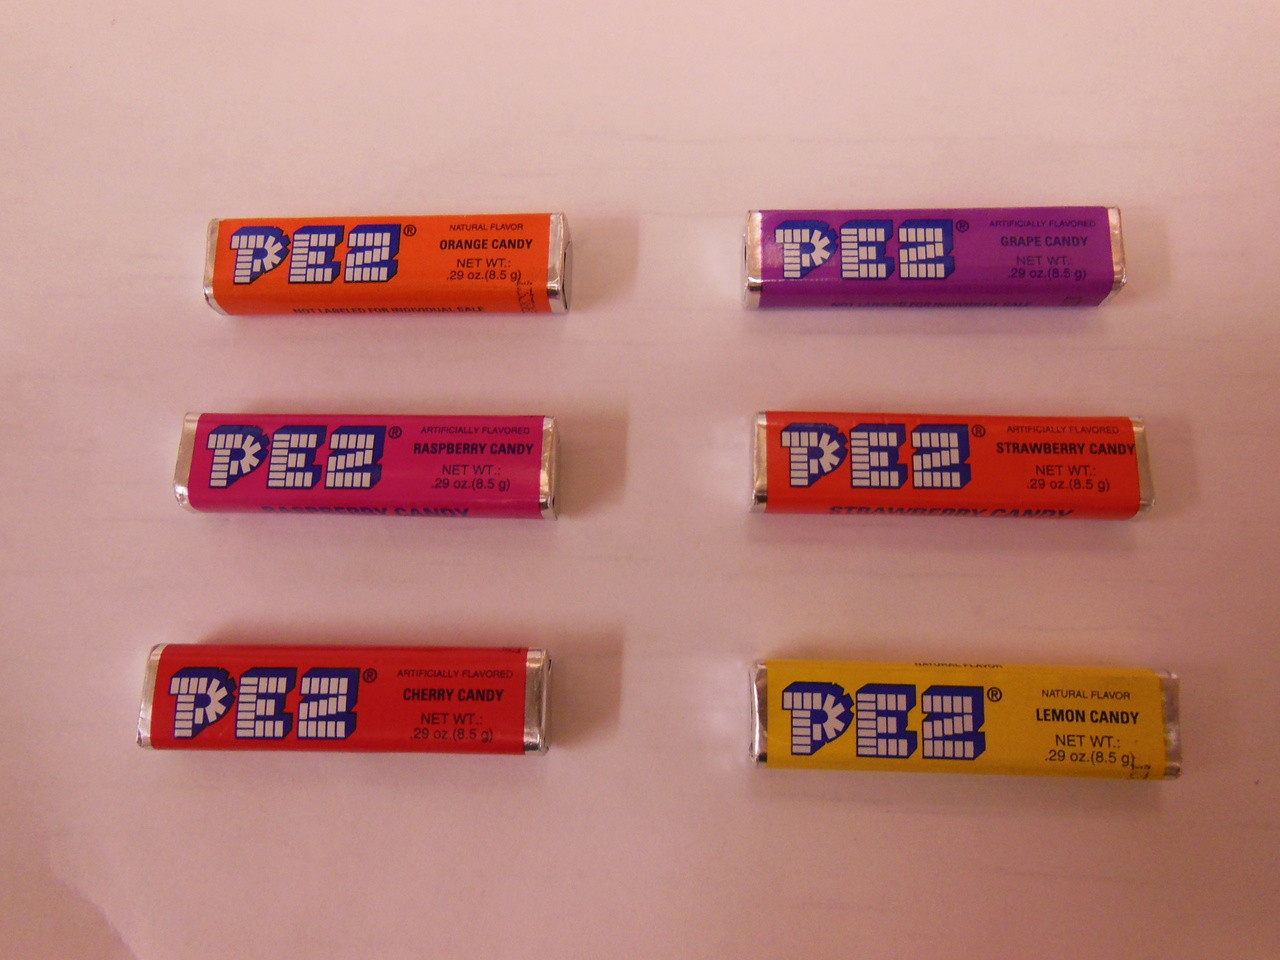 PEZ Grape Candy Refills .29 oz. - 1 lb. Bag